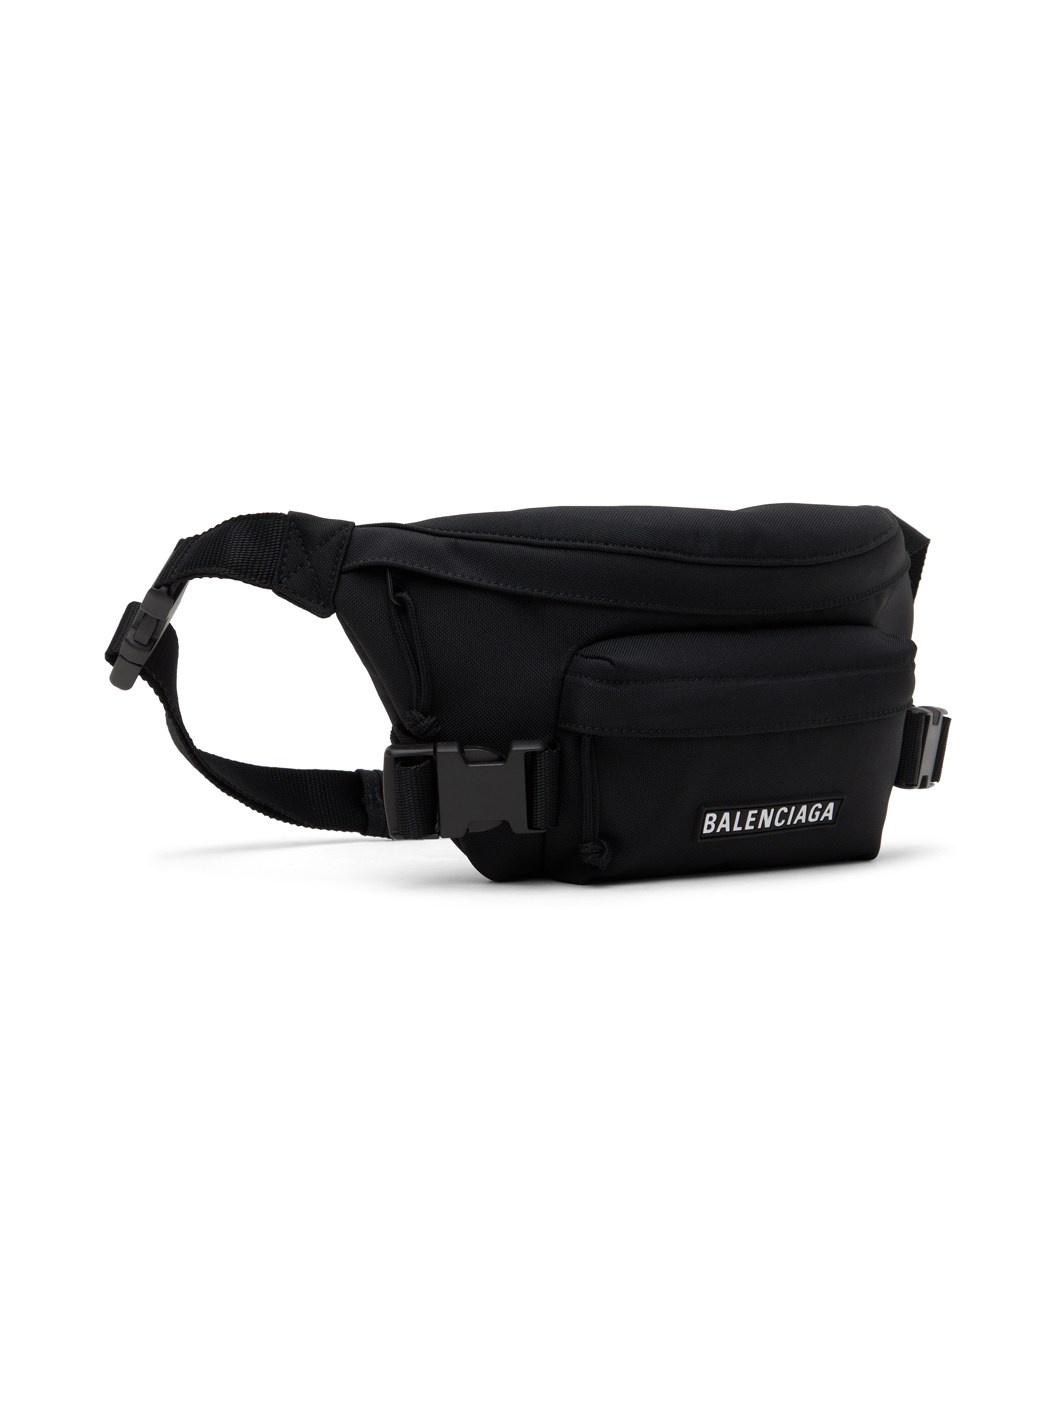 Black Skiwear Ski Belt Bag - 2